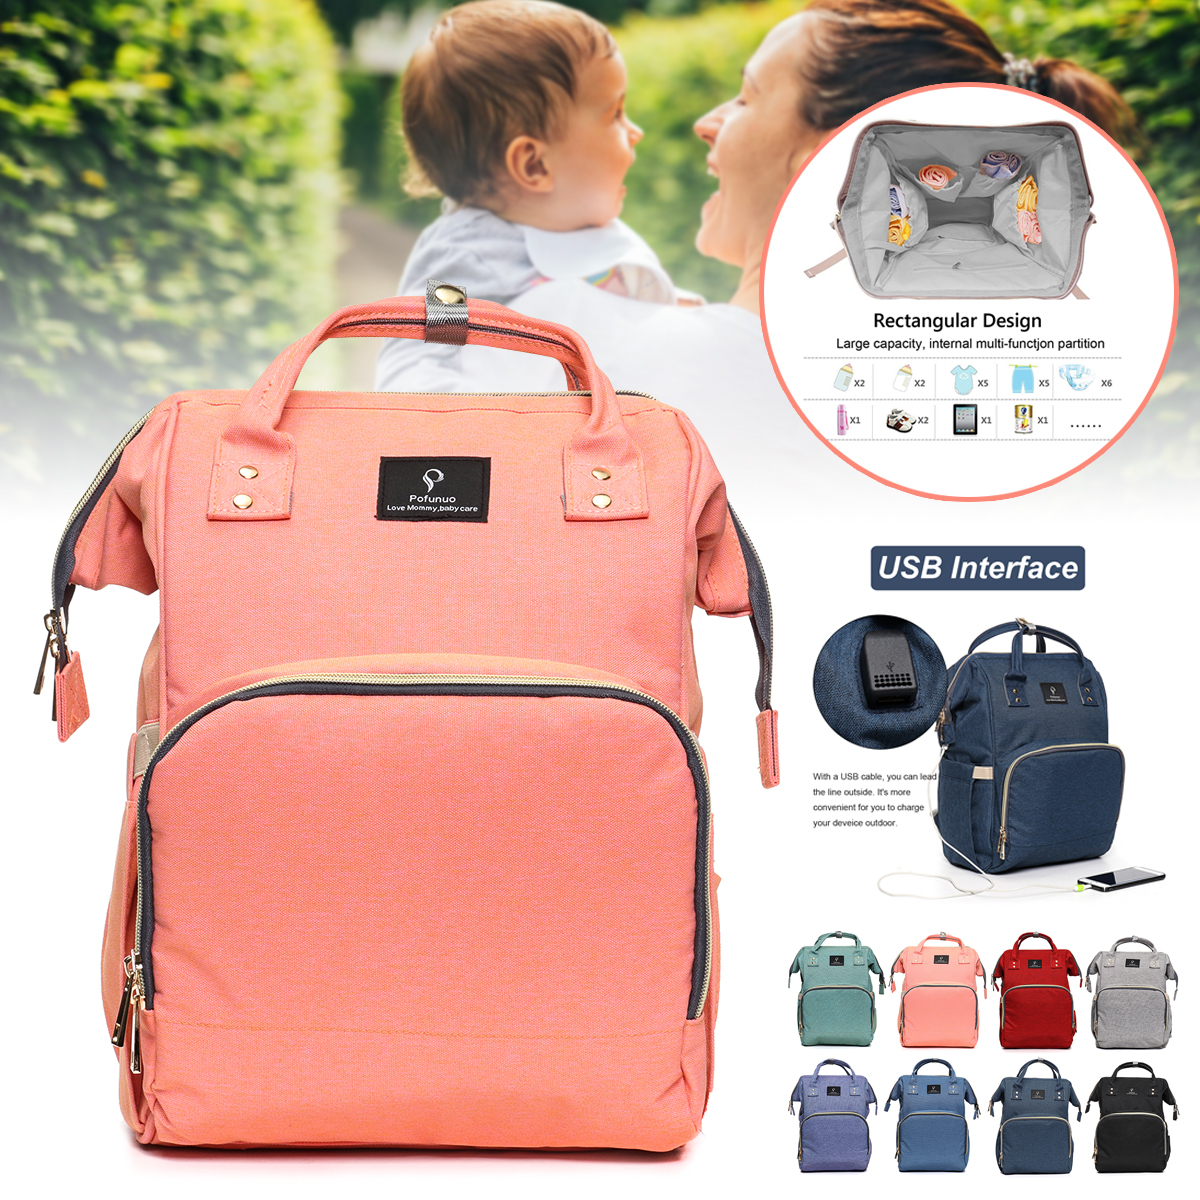 Pofunuo-Waterproof-Mummy-Baby-Diaper-Backpack-with-USB-Interface-Charging-Waterproof-Oxford-Diaper-N-1245692-2